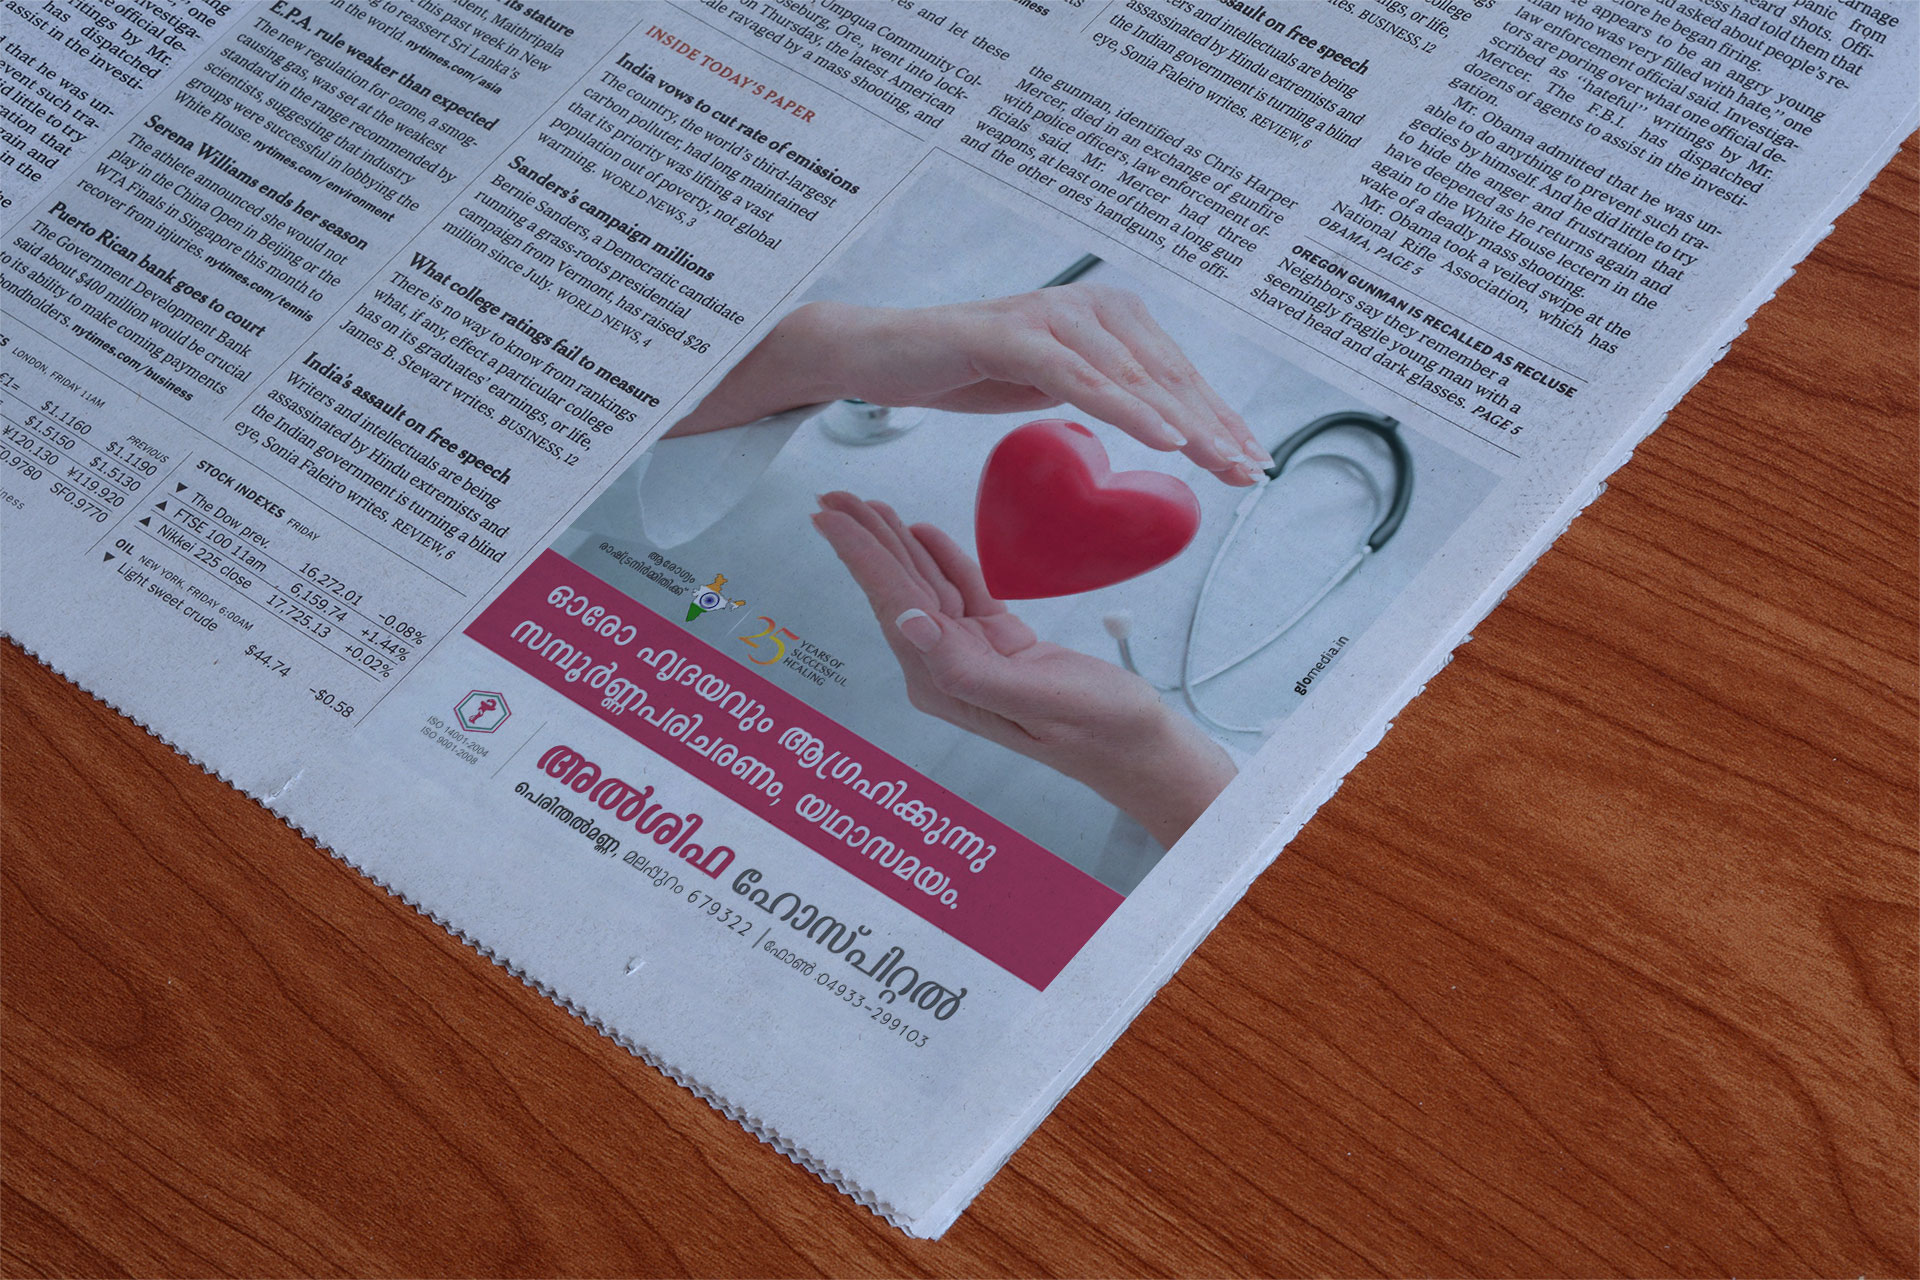 A newspaper advertisemnet of Al Shifa Hospital - Heart Care campaign